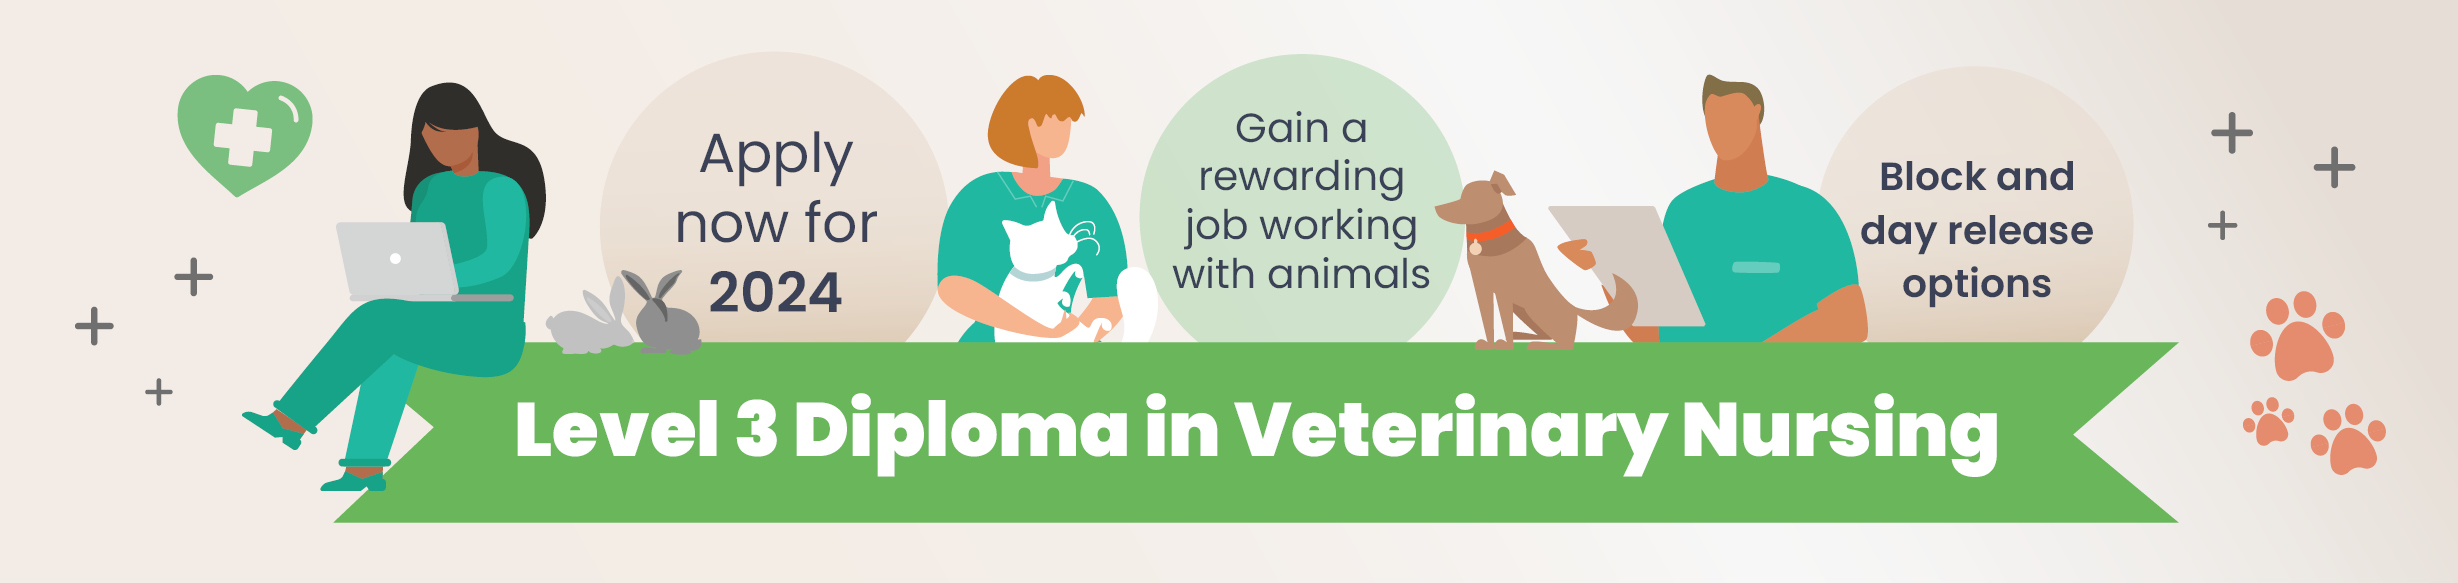 Start studying the Level 3 Diploma in Veterinary Nursing in January 2023